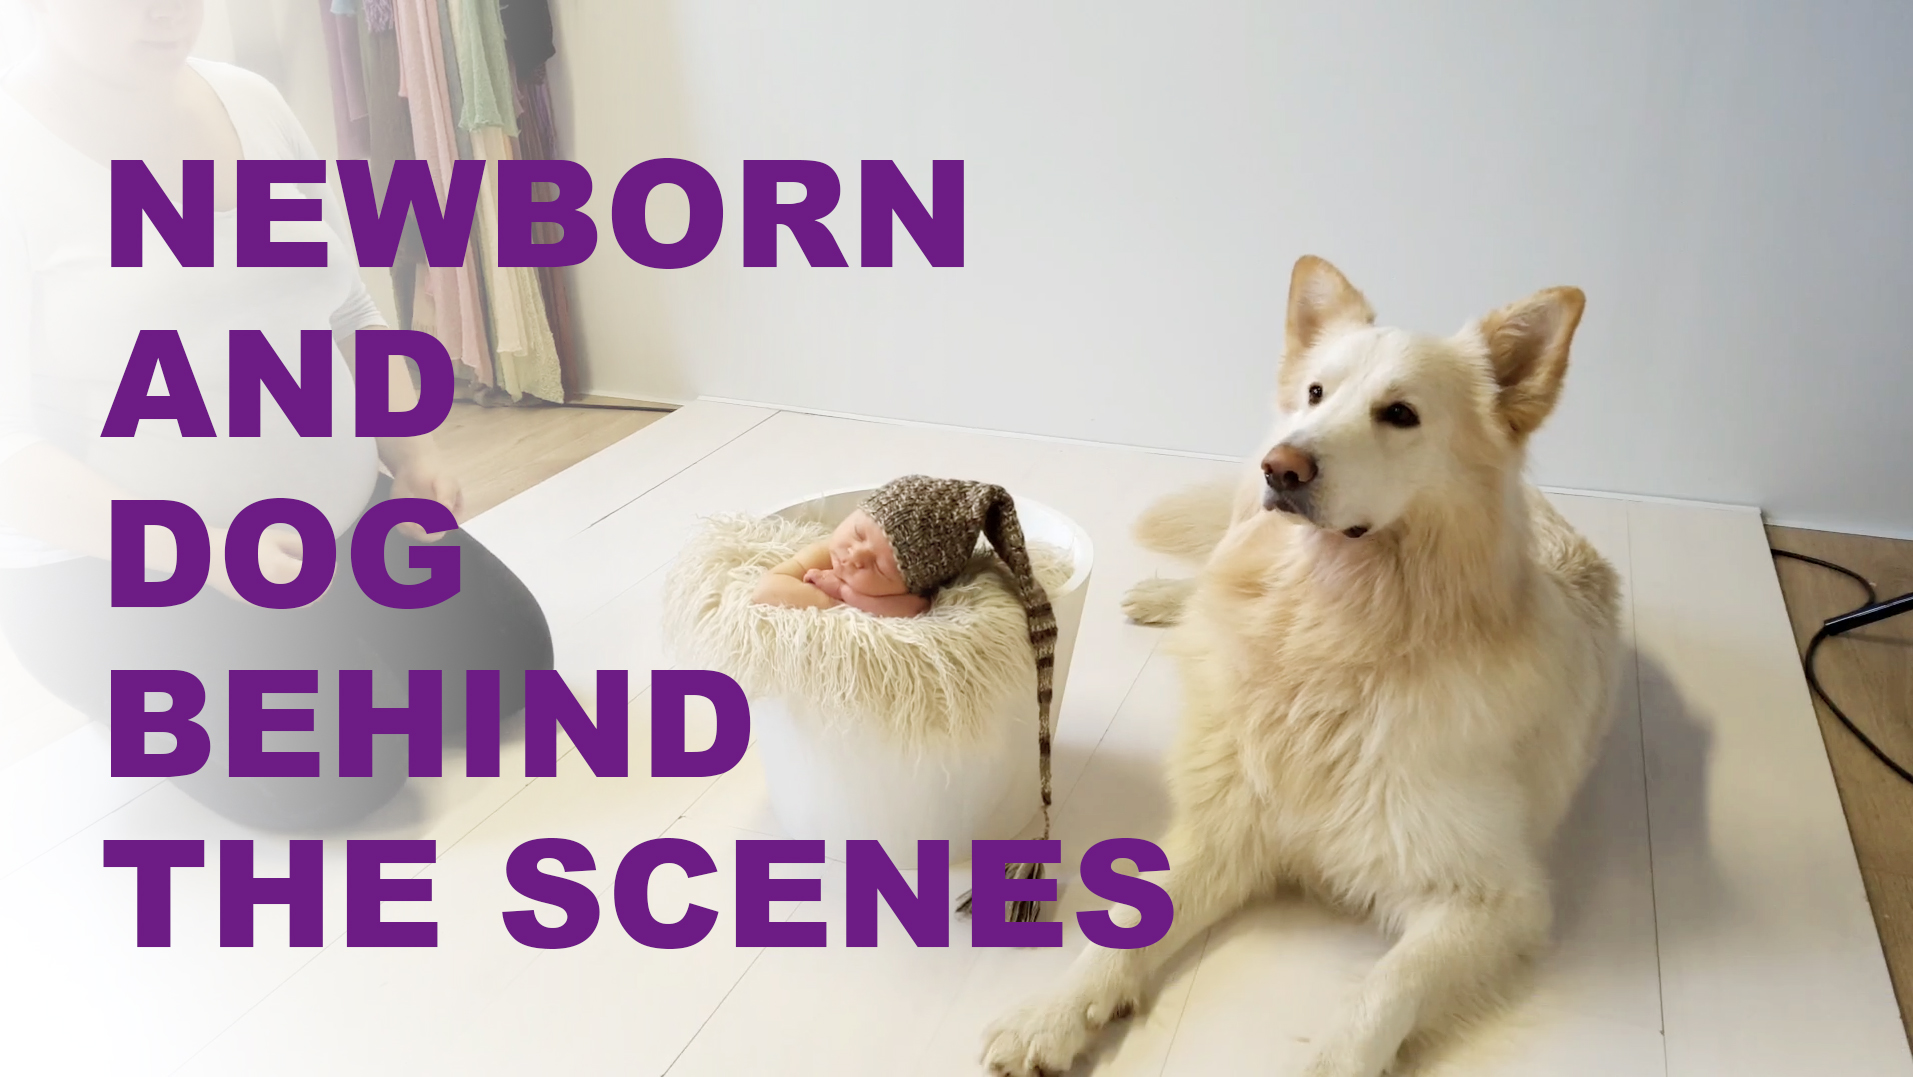 Newborn and dog photography video